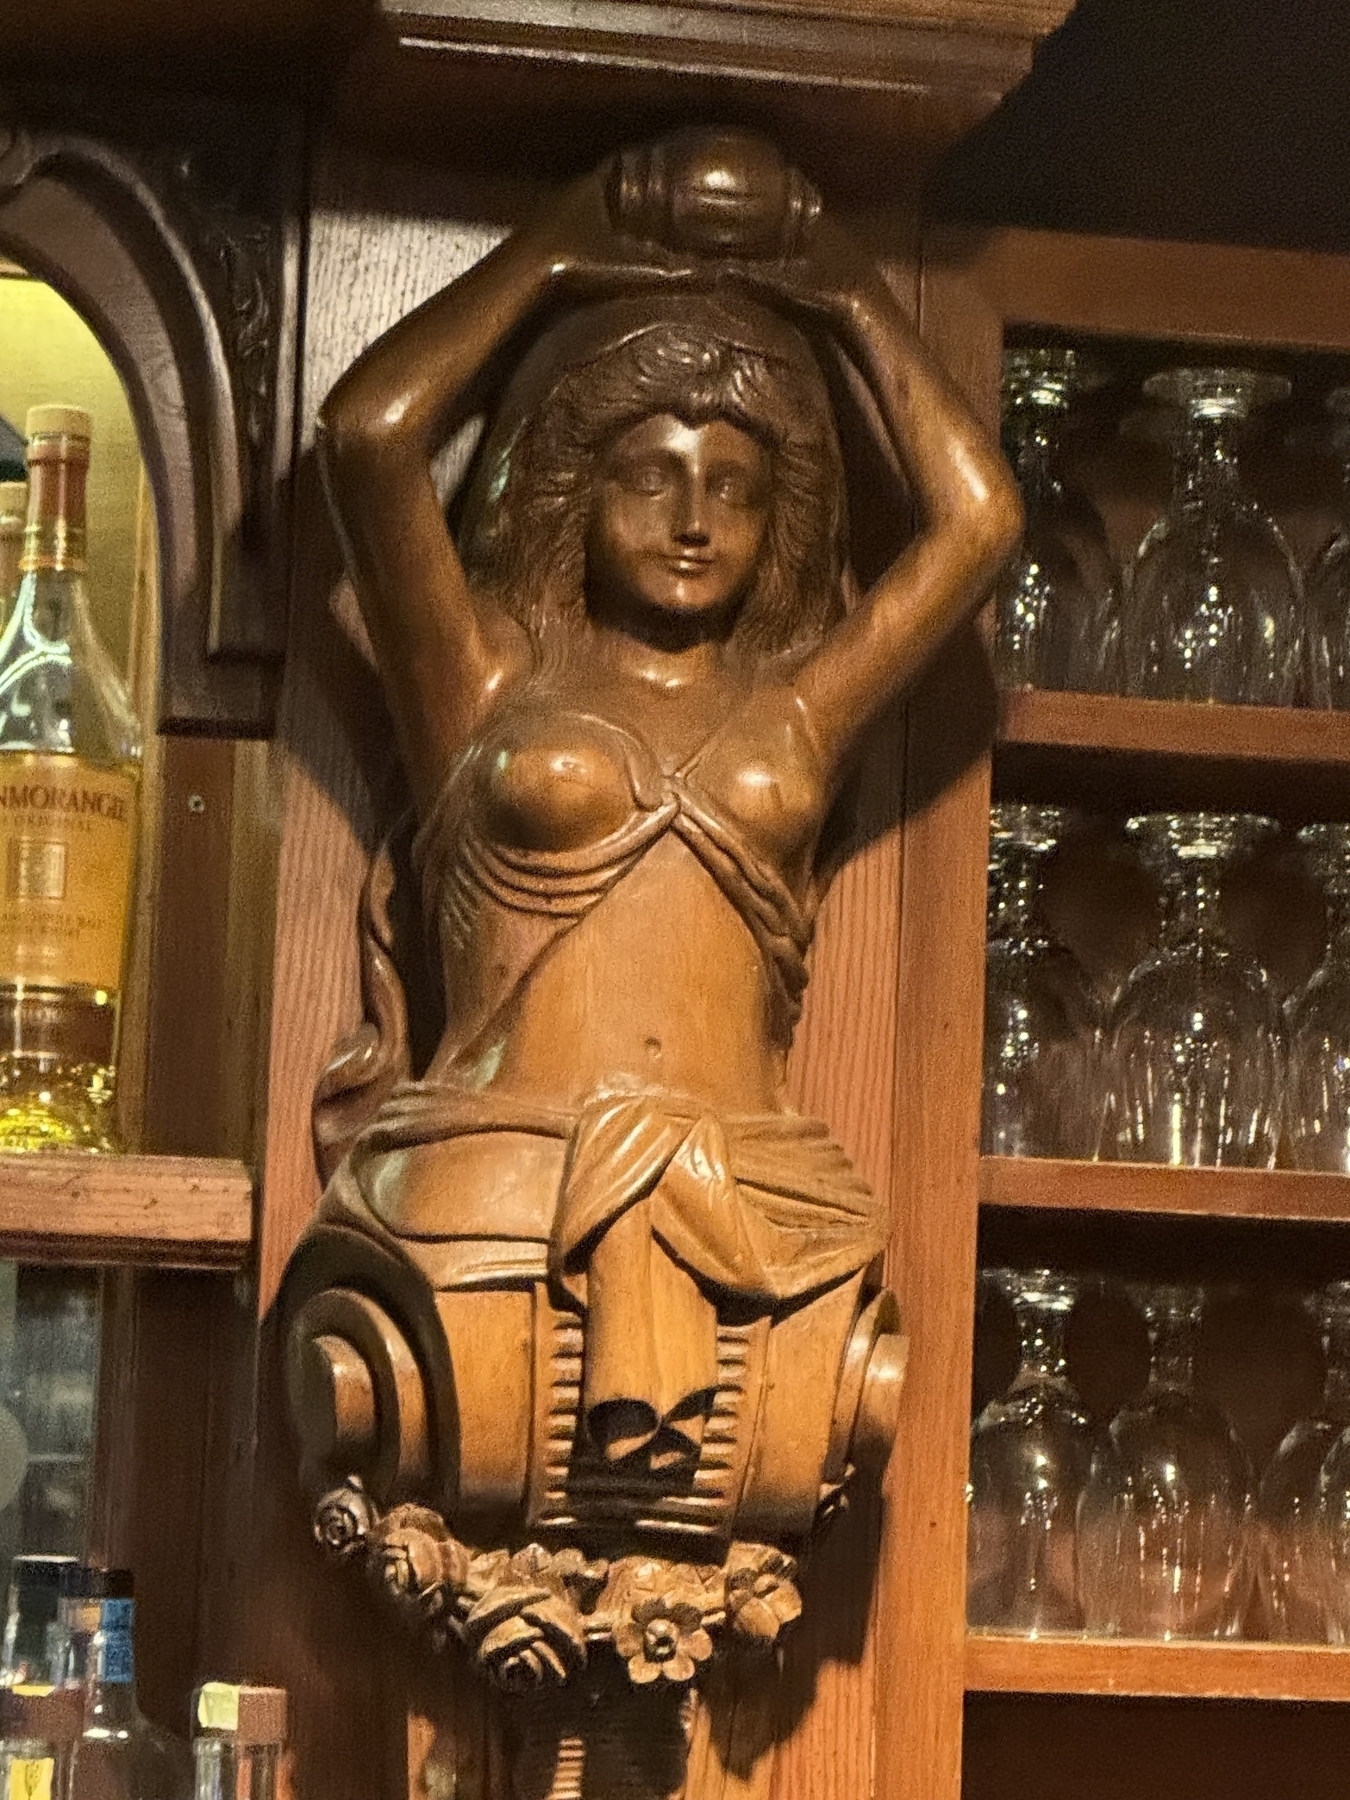 Wooden statue/maidenhead at a bar 